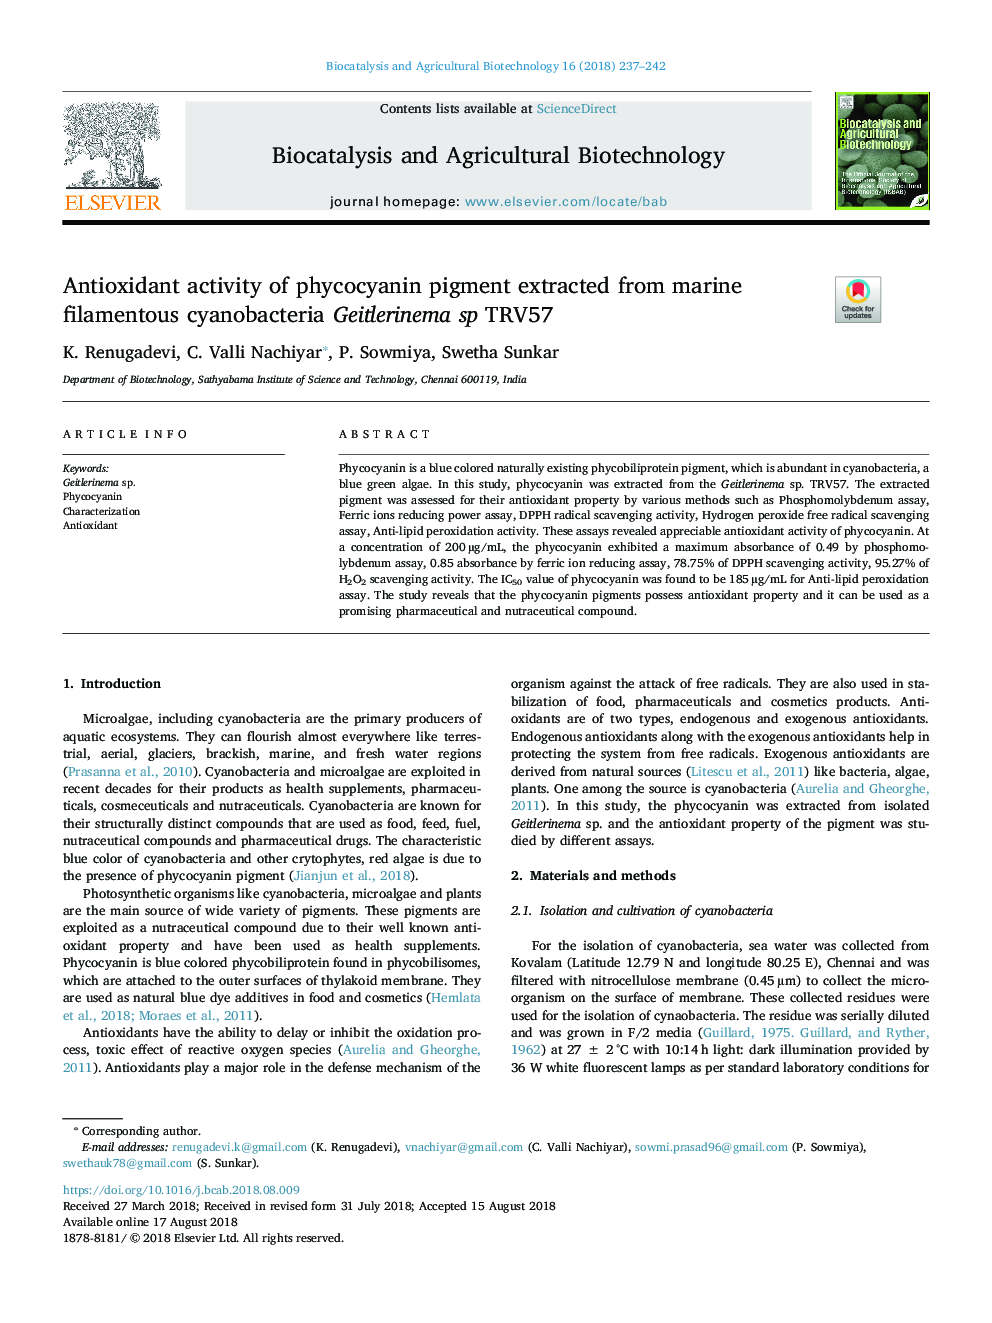 Antioxidant activity of phycocyanin pigment extracted from marine filamentous cyanobacteria Geitlerinema sp TRV57